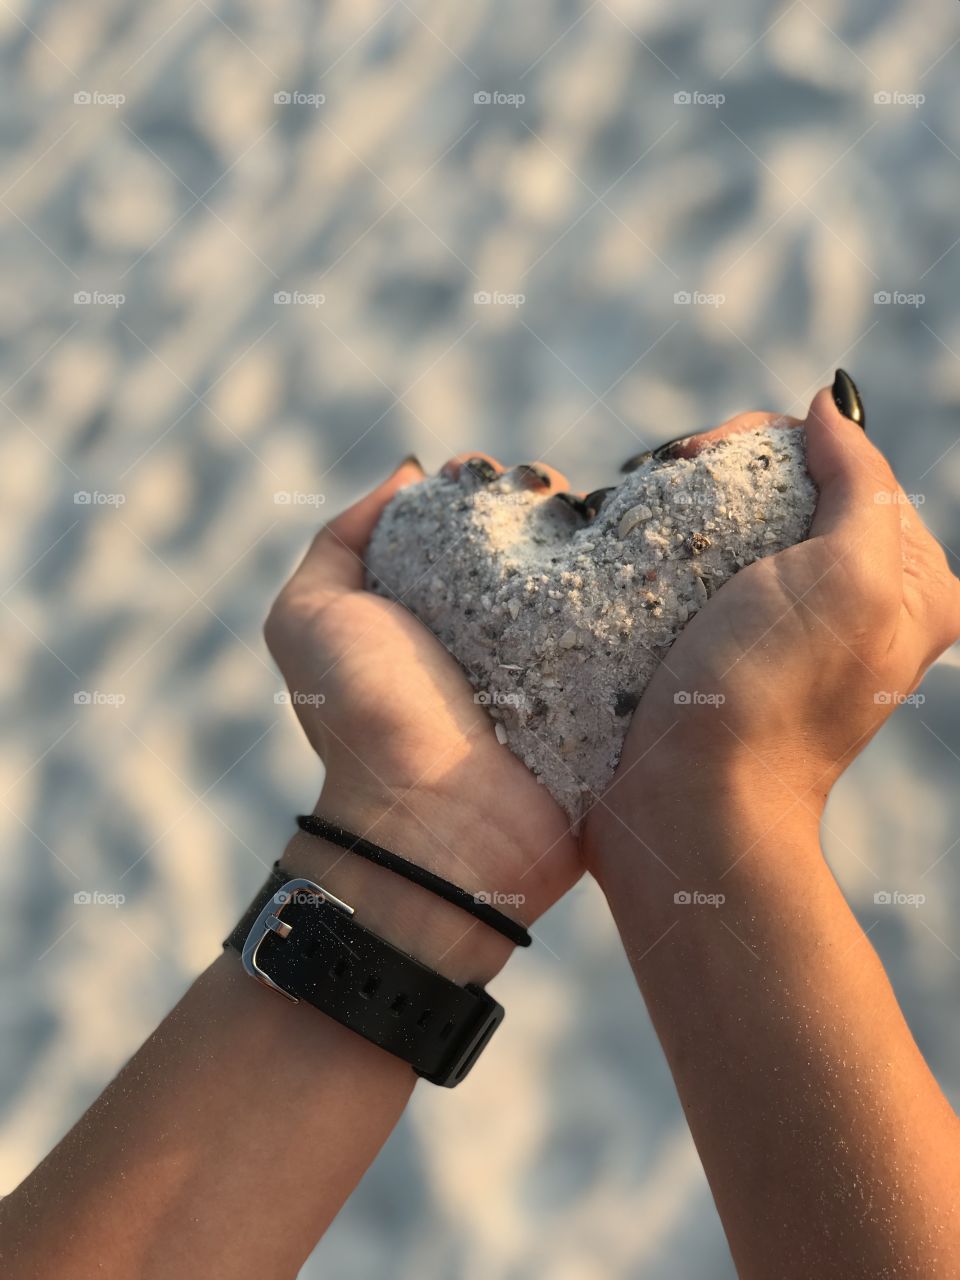 Heart shaped hands with sand 
Anna Maria Island, FL, USA